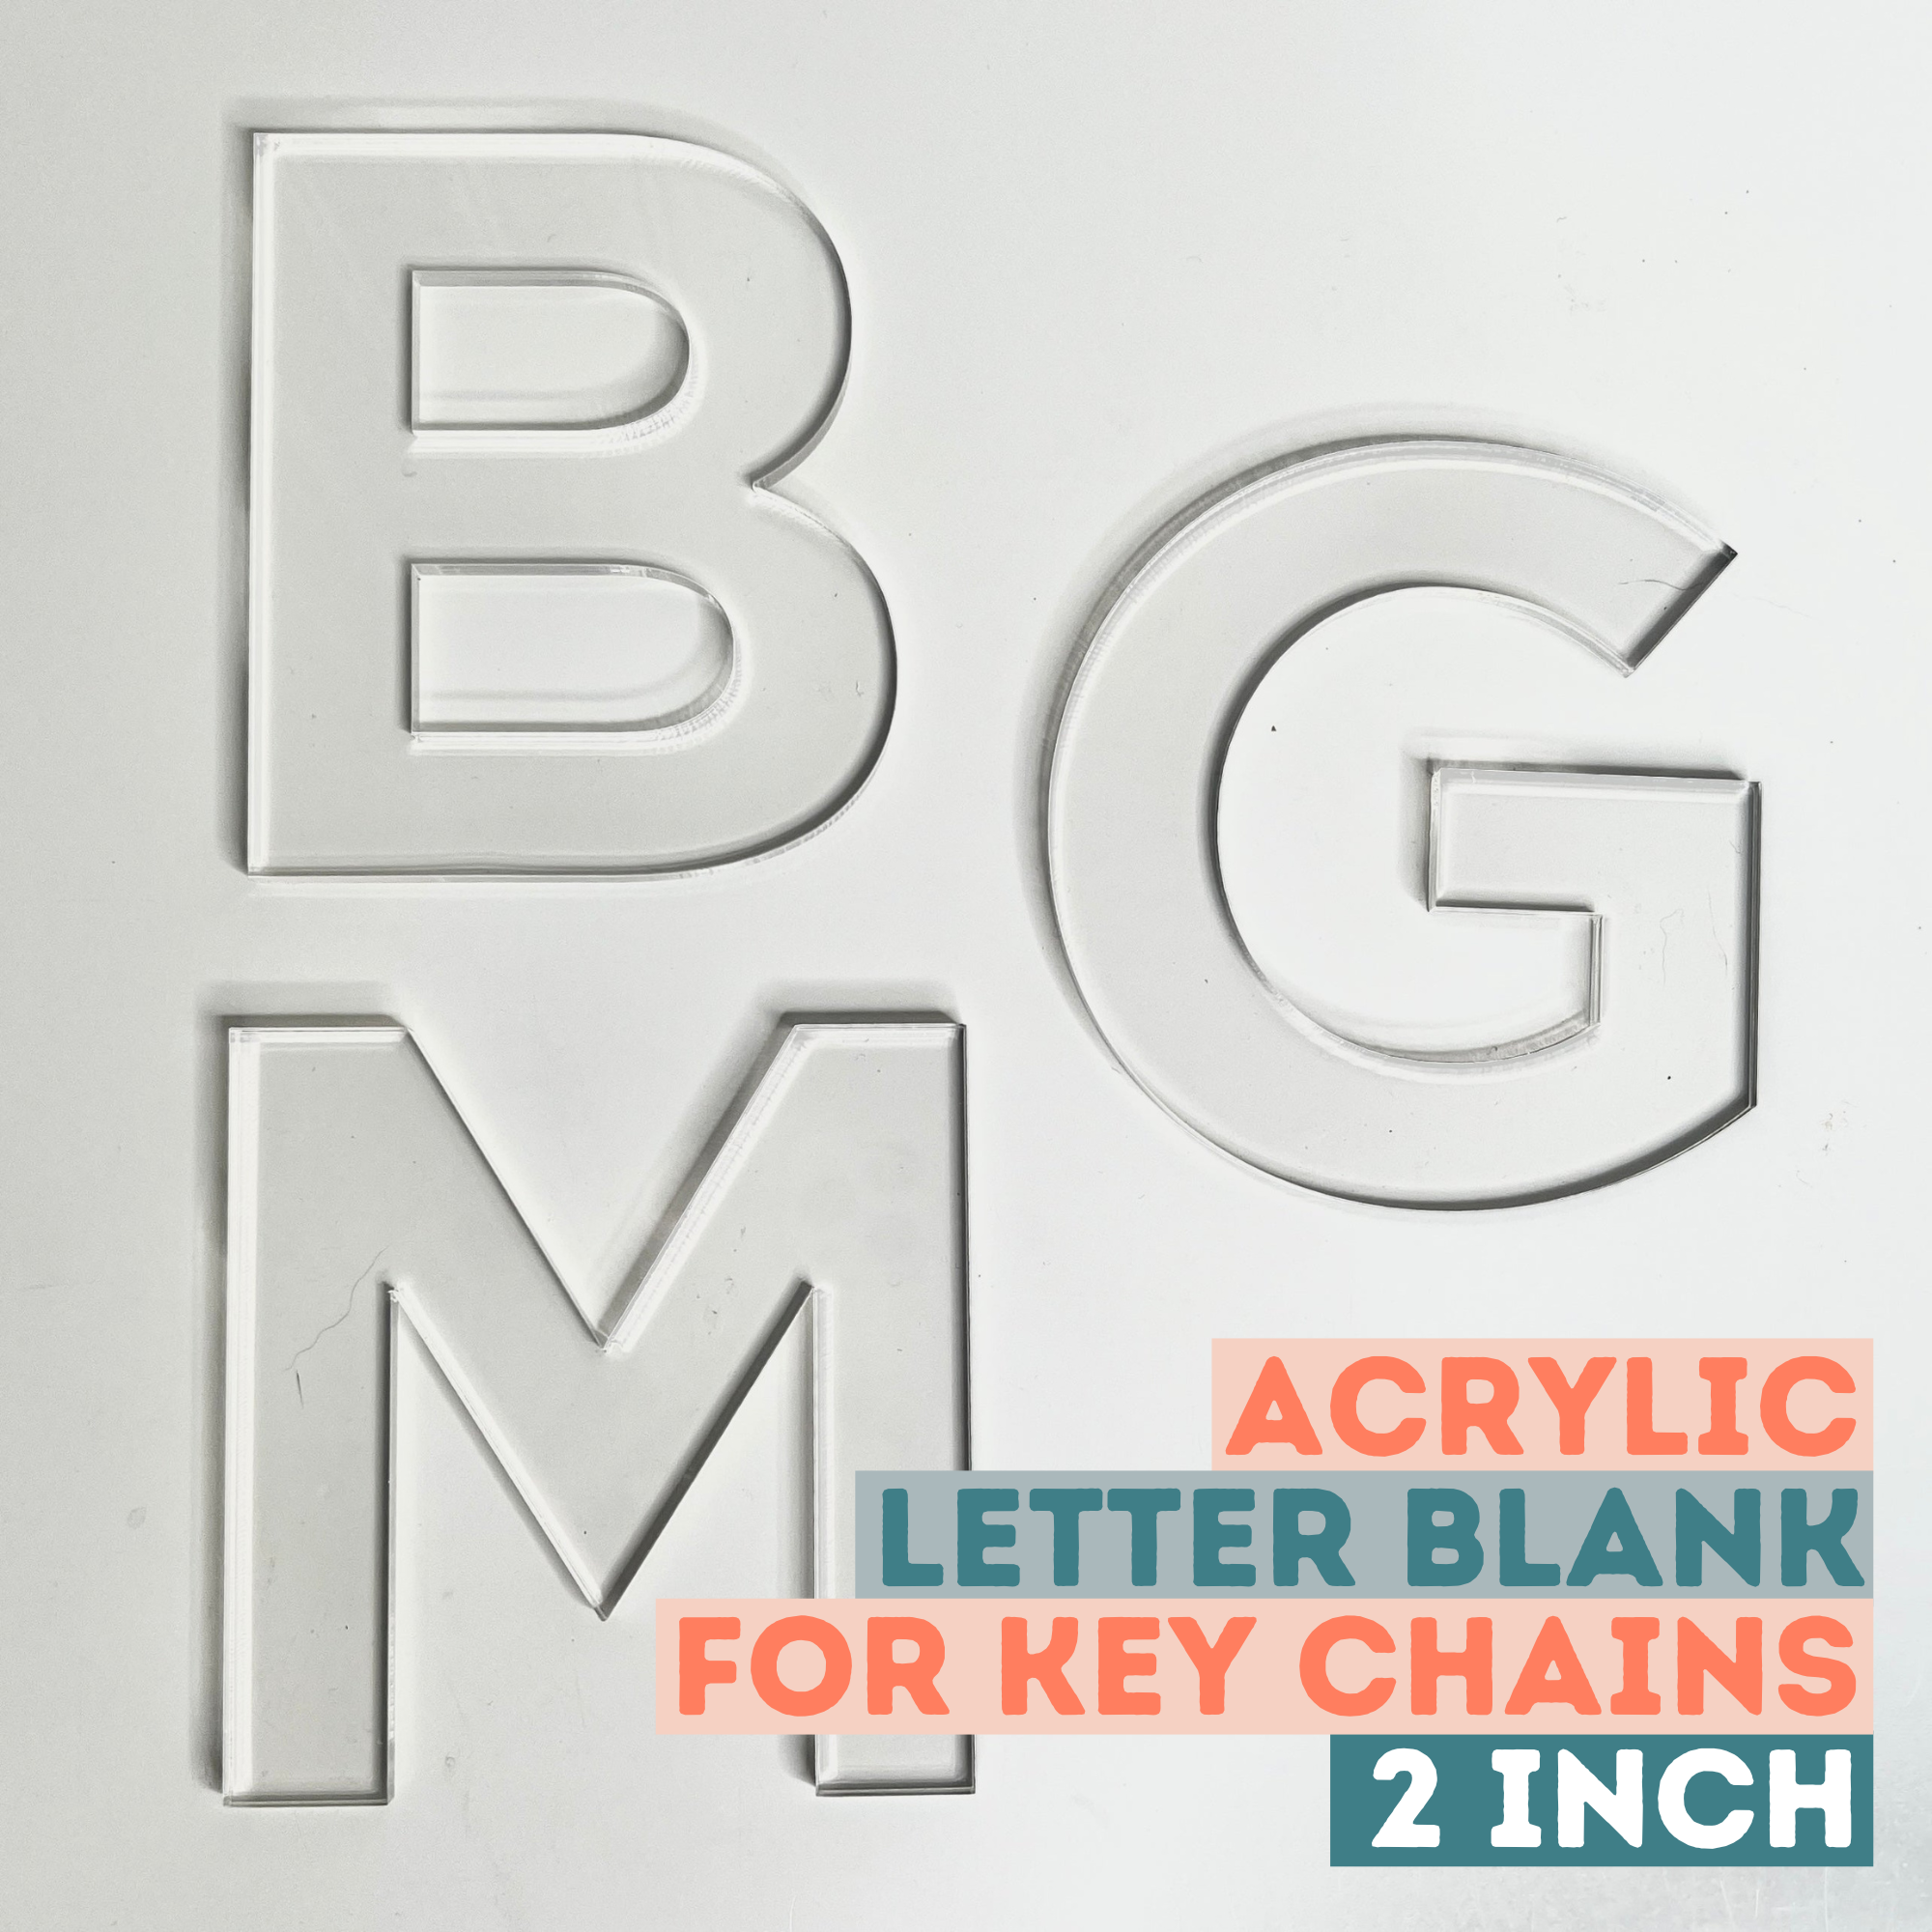 Acrylic Letter Blank Key Chain - DIY Kit - 2 inch